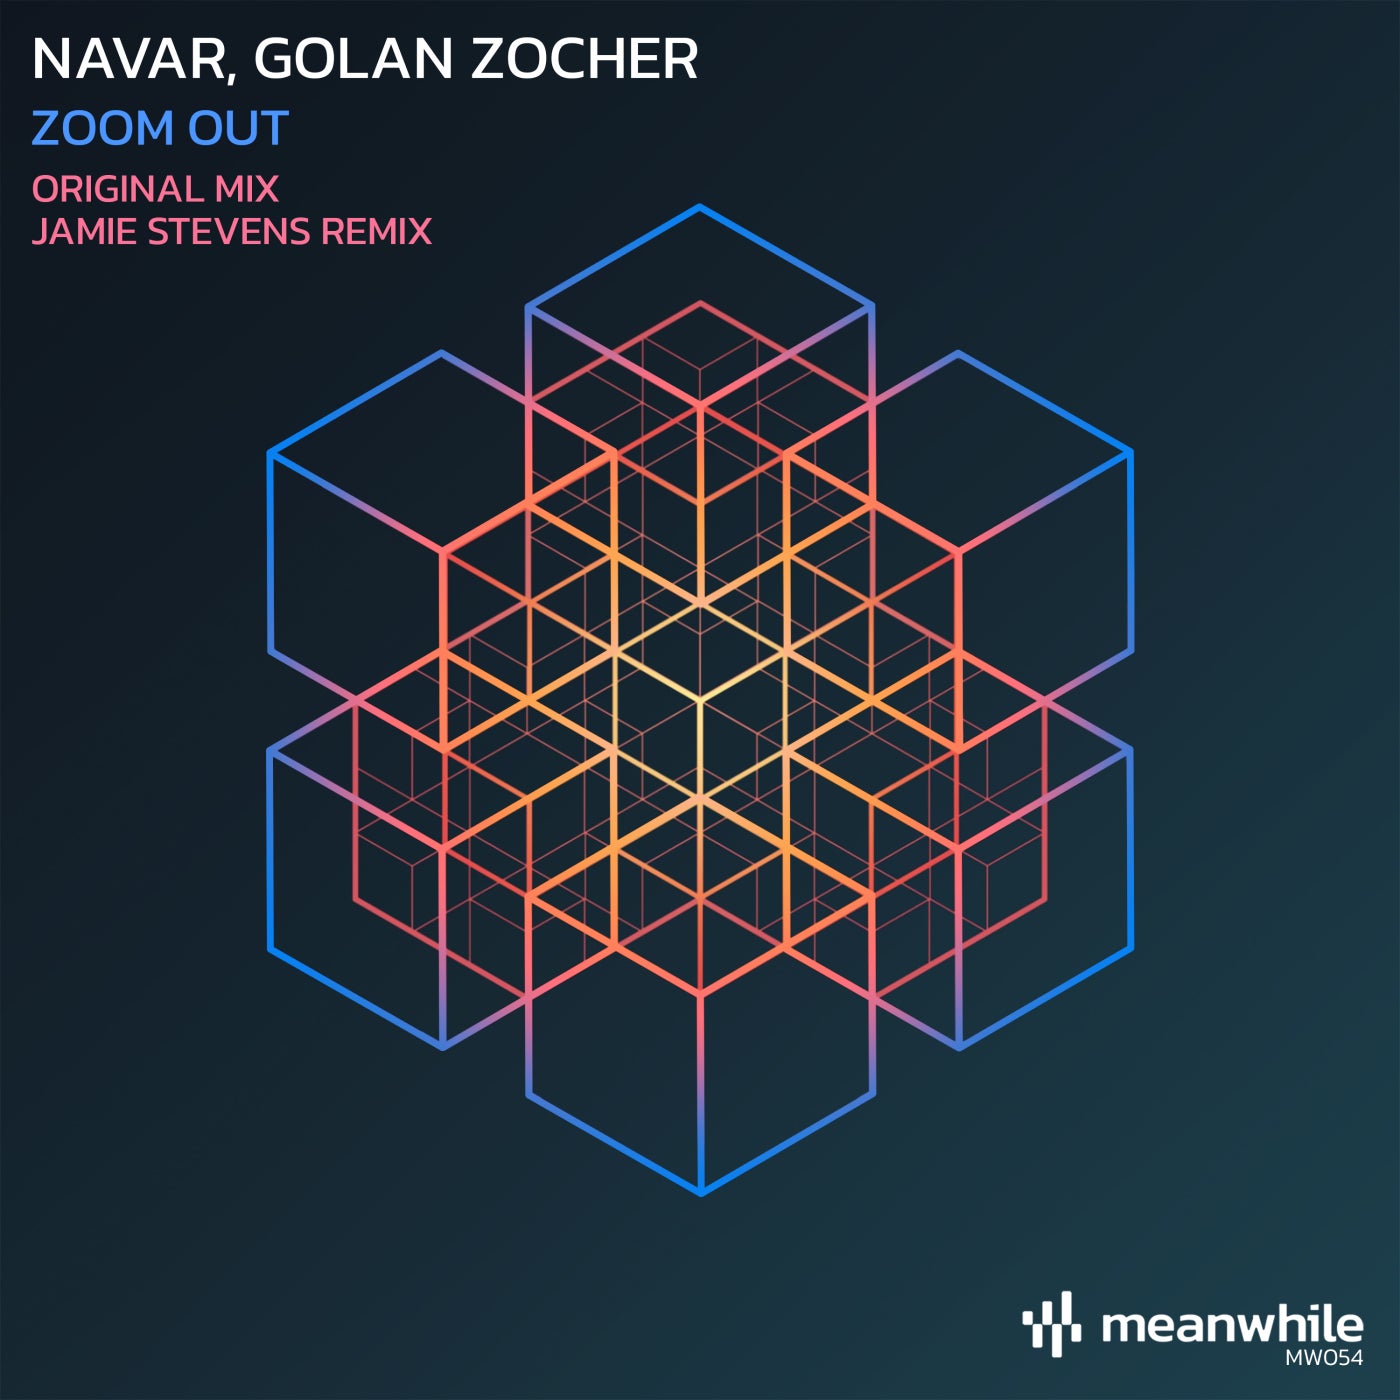 Cover - Navar, Golan Zocher - Zoom Out (Original Mix)